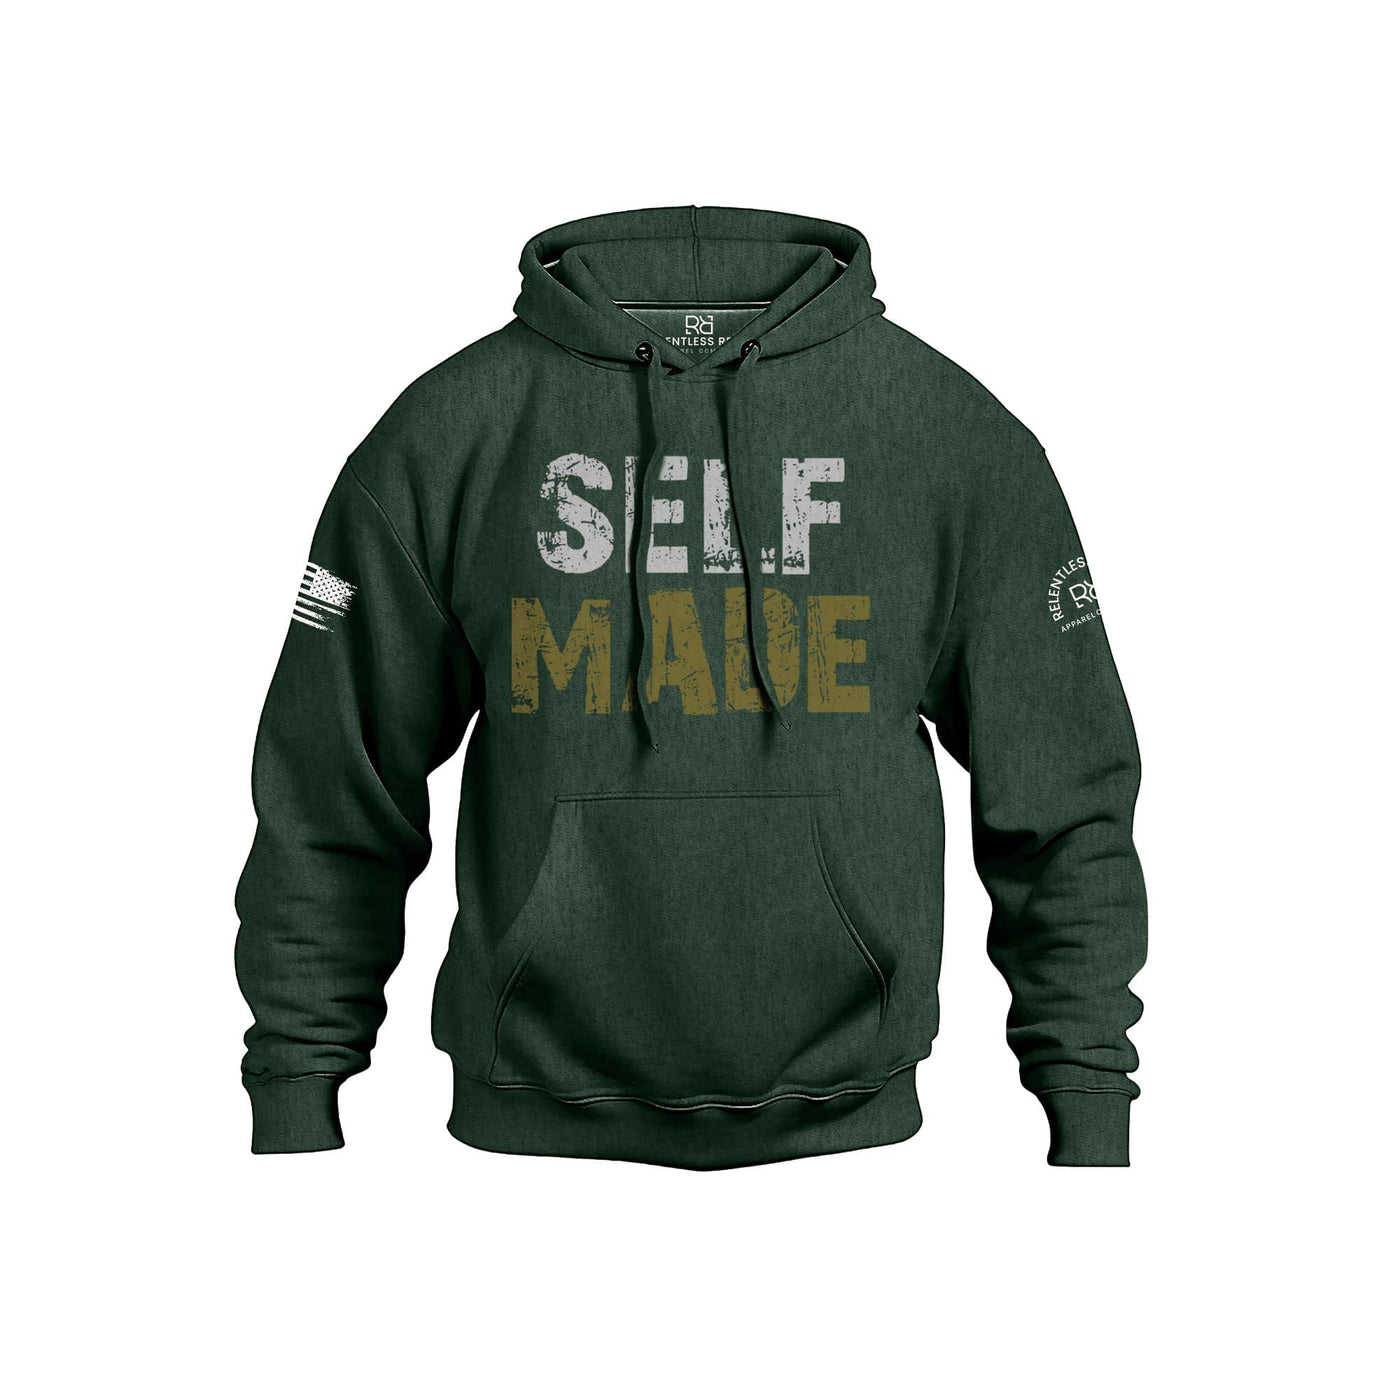 Self Made | Front | Men's Hoodie